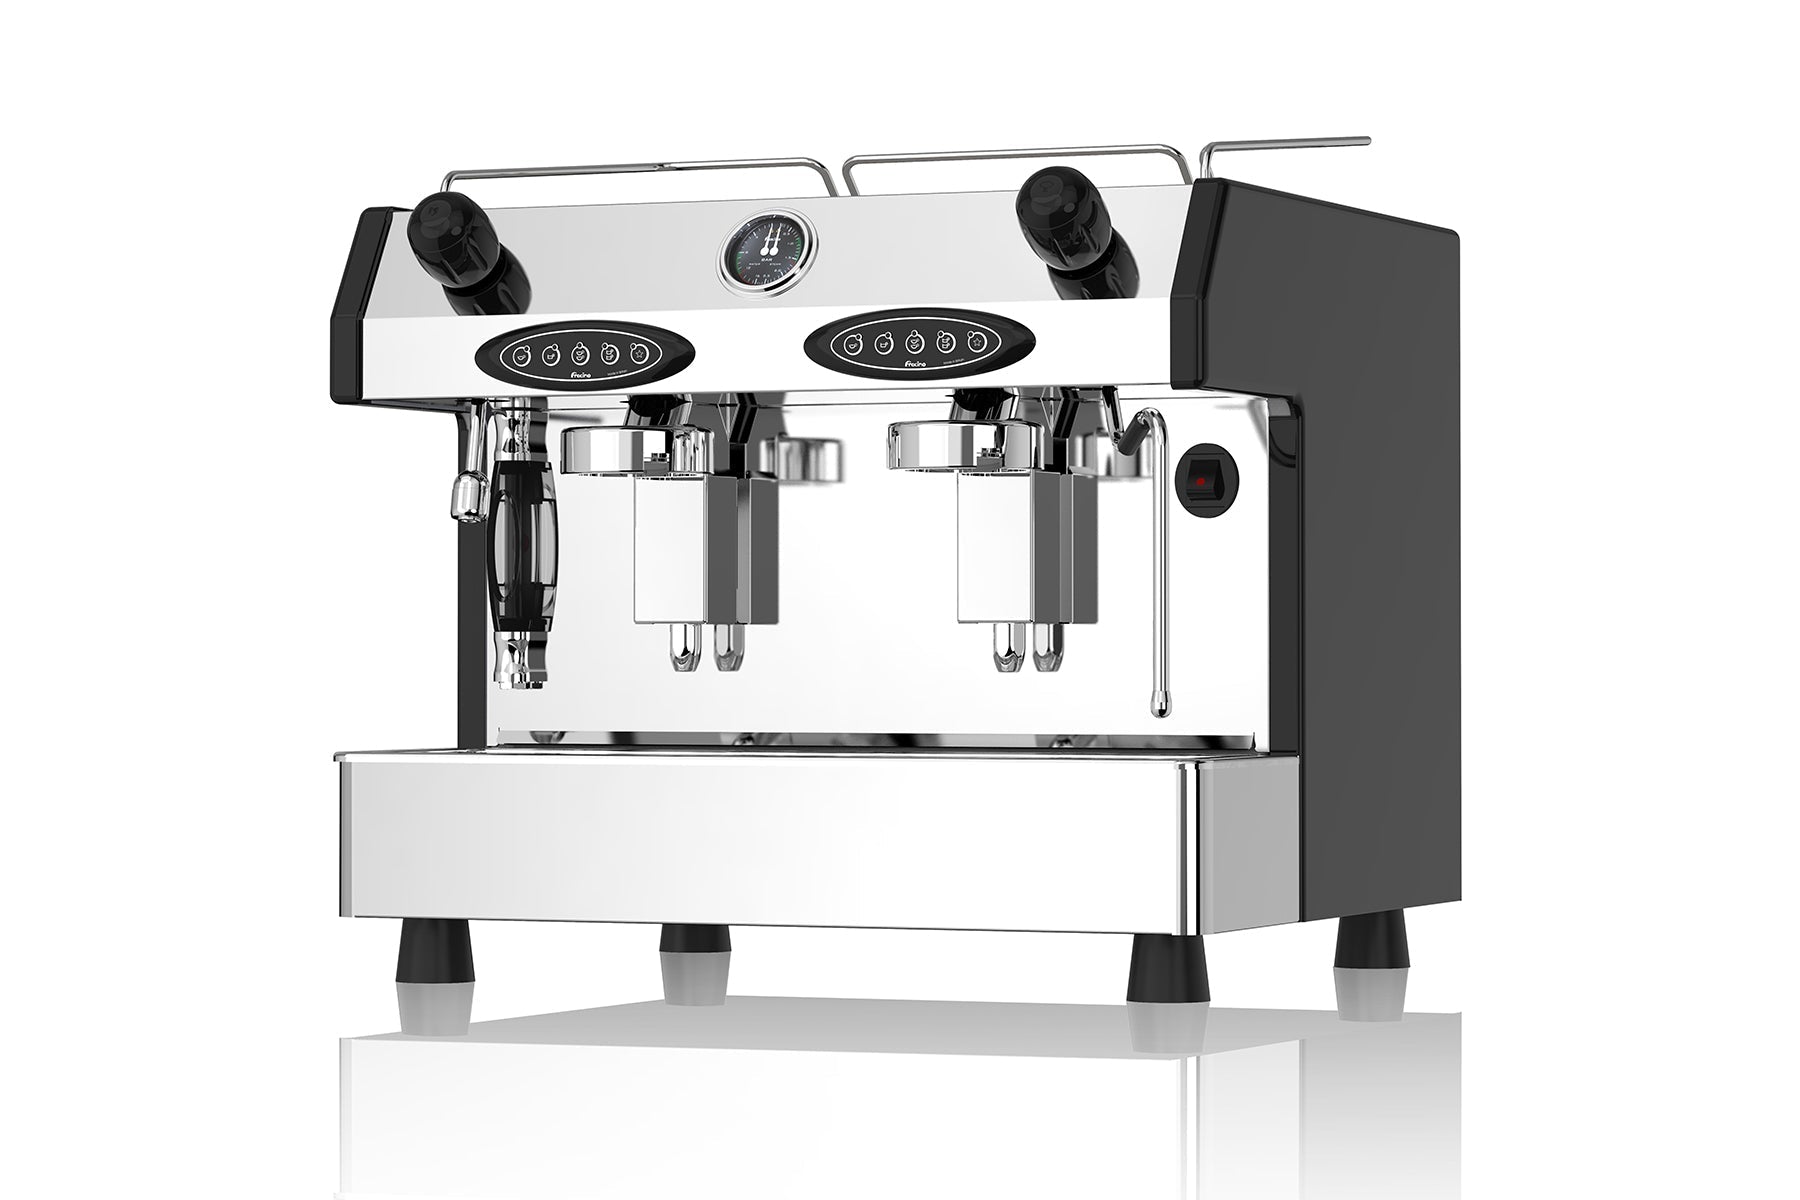 GJ471 Fracino Bambino 2 Group Automatic Espresso Coffee Machine BAM2E JD Catering Equipment Solutions Ltd